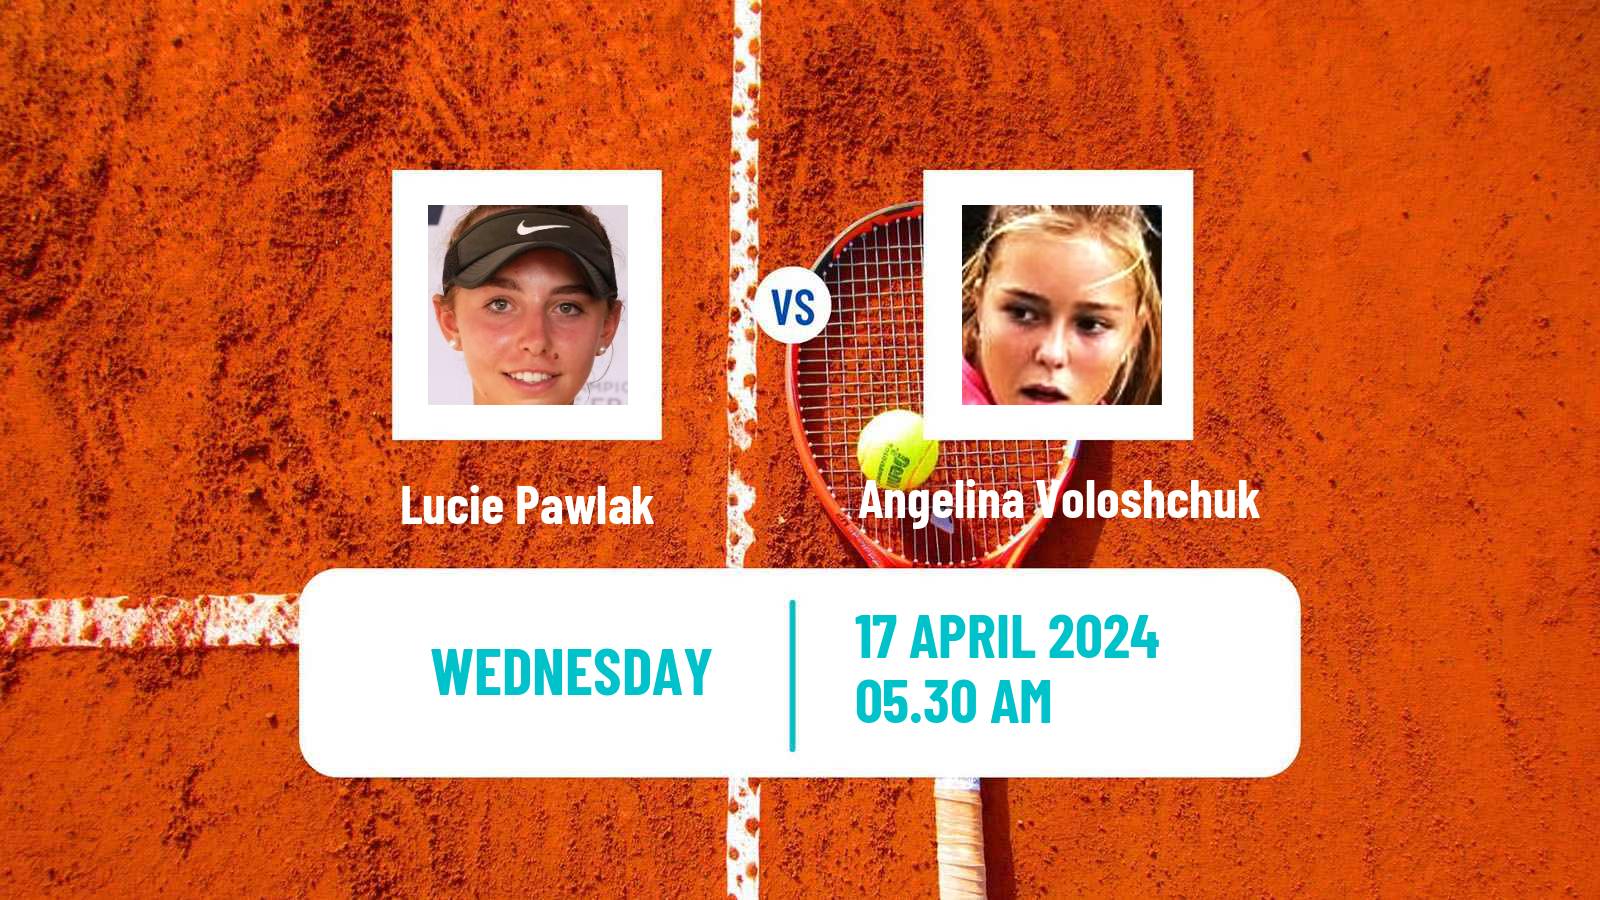 Tennis ITF W15 Telde 3 Women Lucie Pawlak - Angelina Voloshchuk